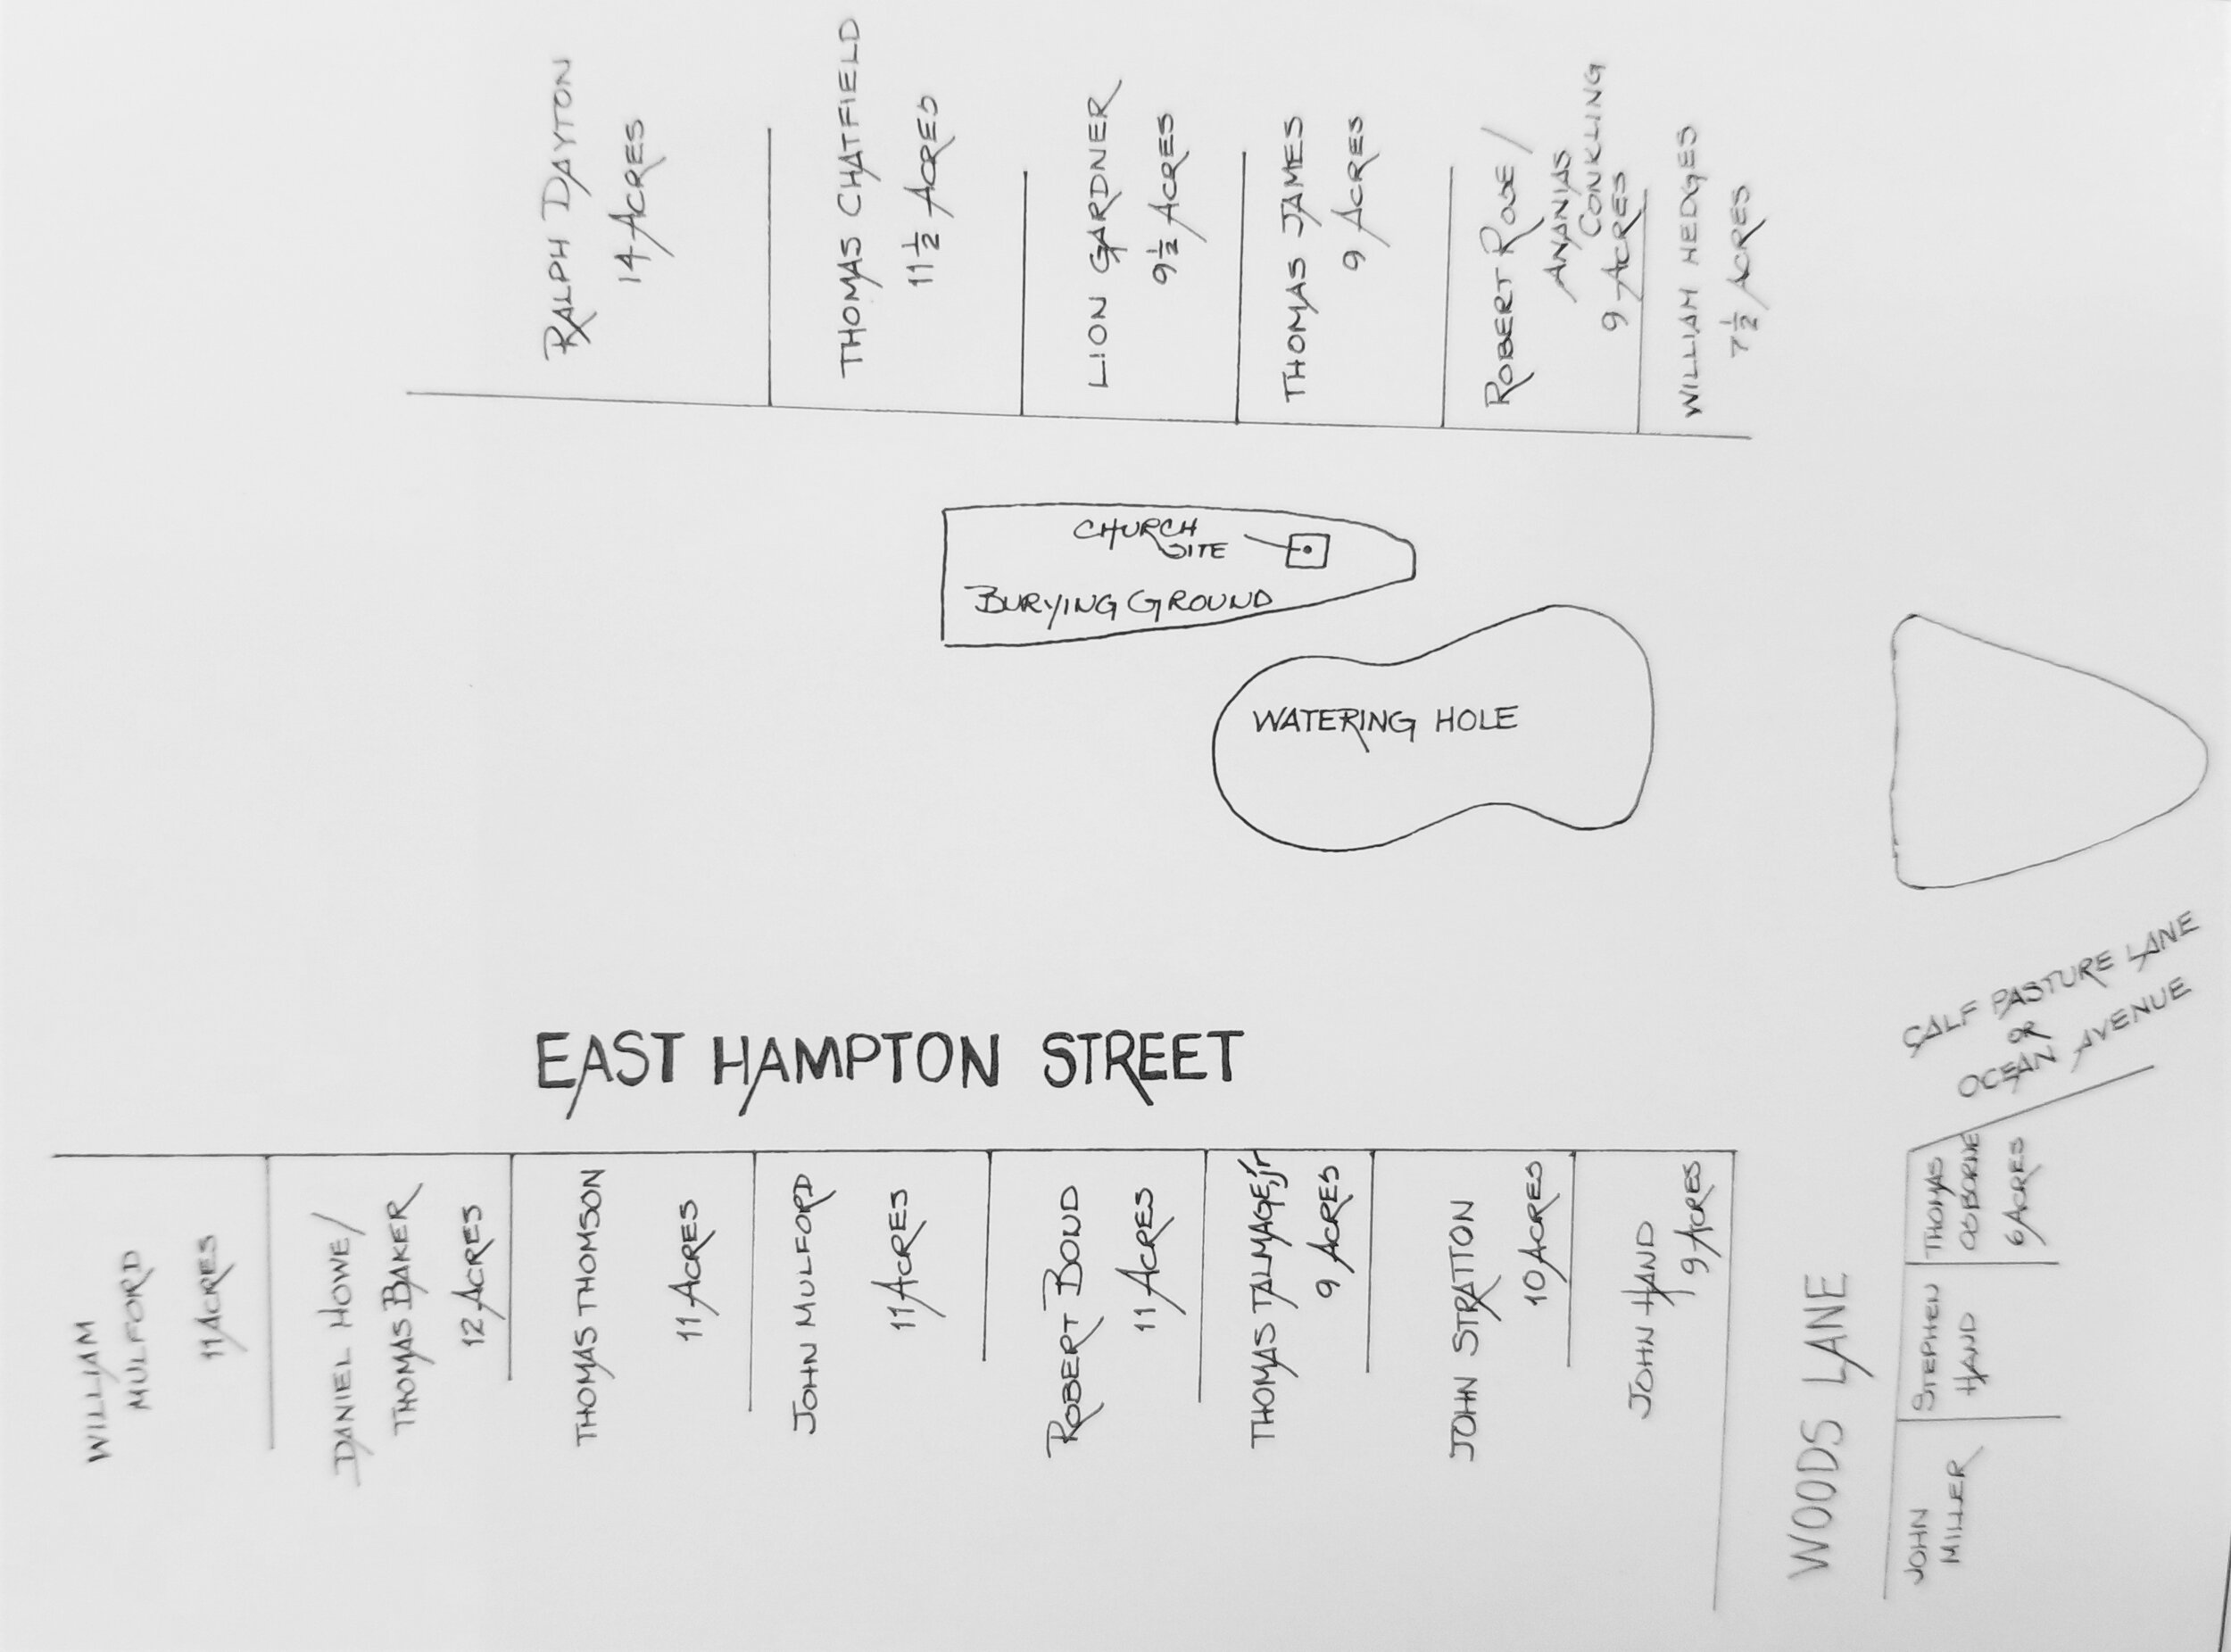 Map of East Hampton